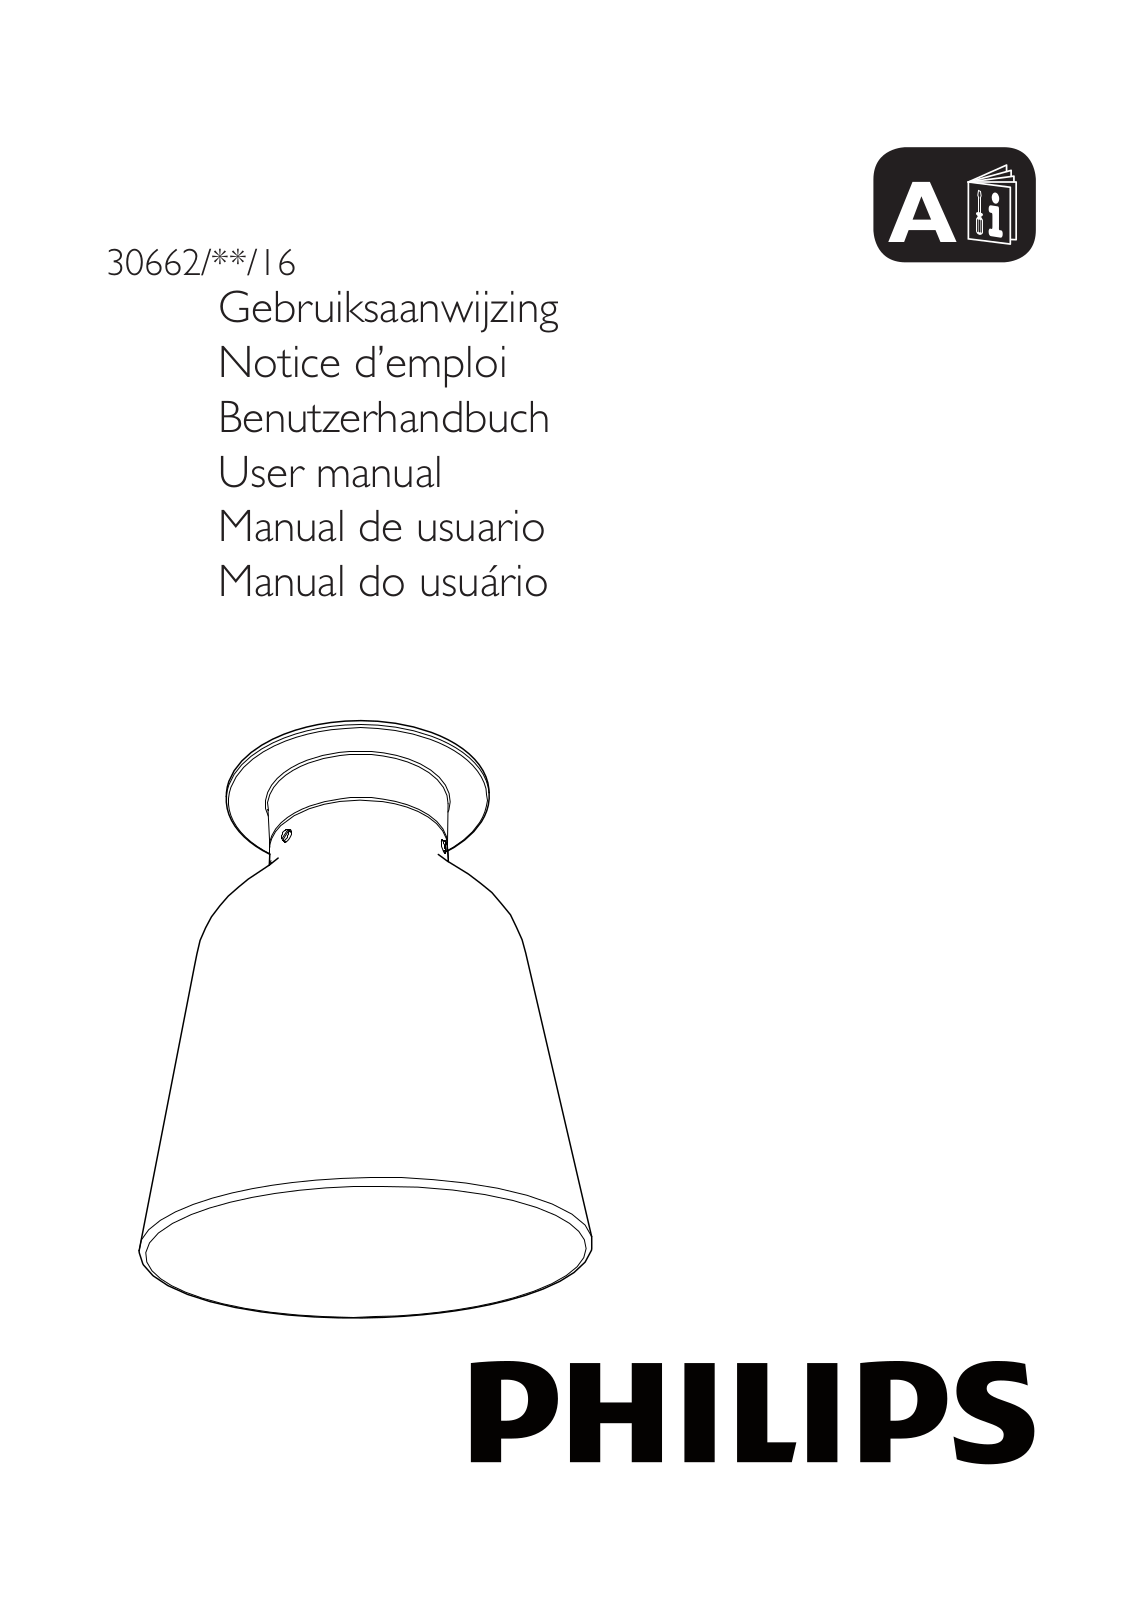 Philips 30662-31-16 User Manual